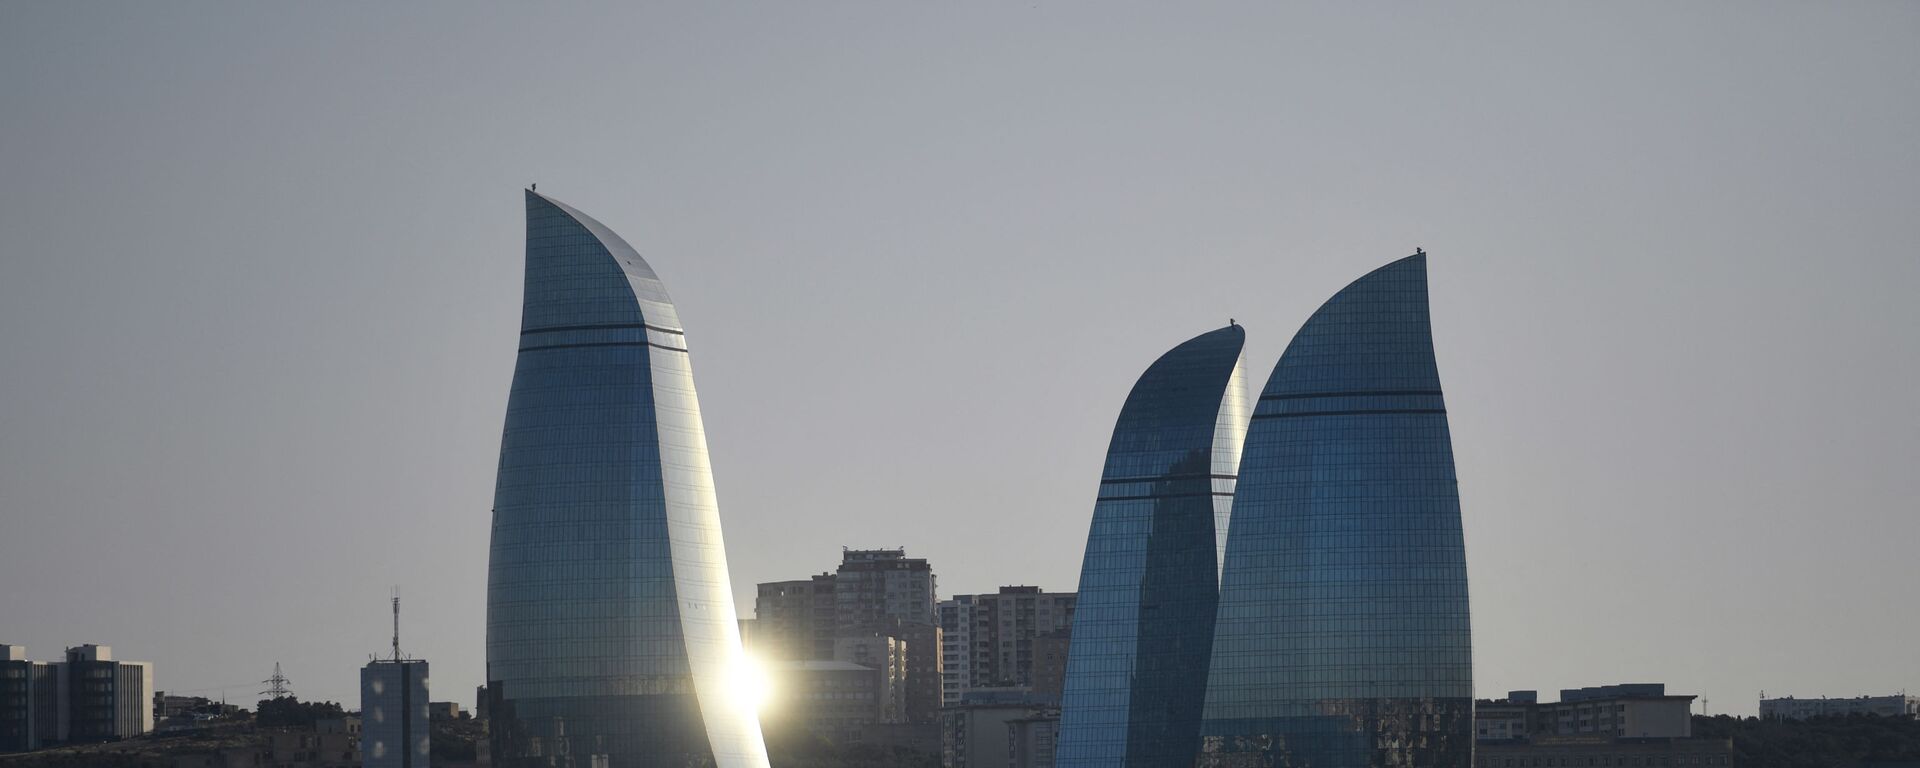 Вид на Flame Towers (Пламенные башни) в Баку, фото из архива - Sputnik Азербайджан, 1920, 06.12.2021